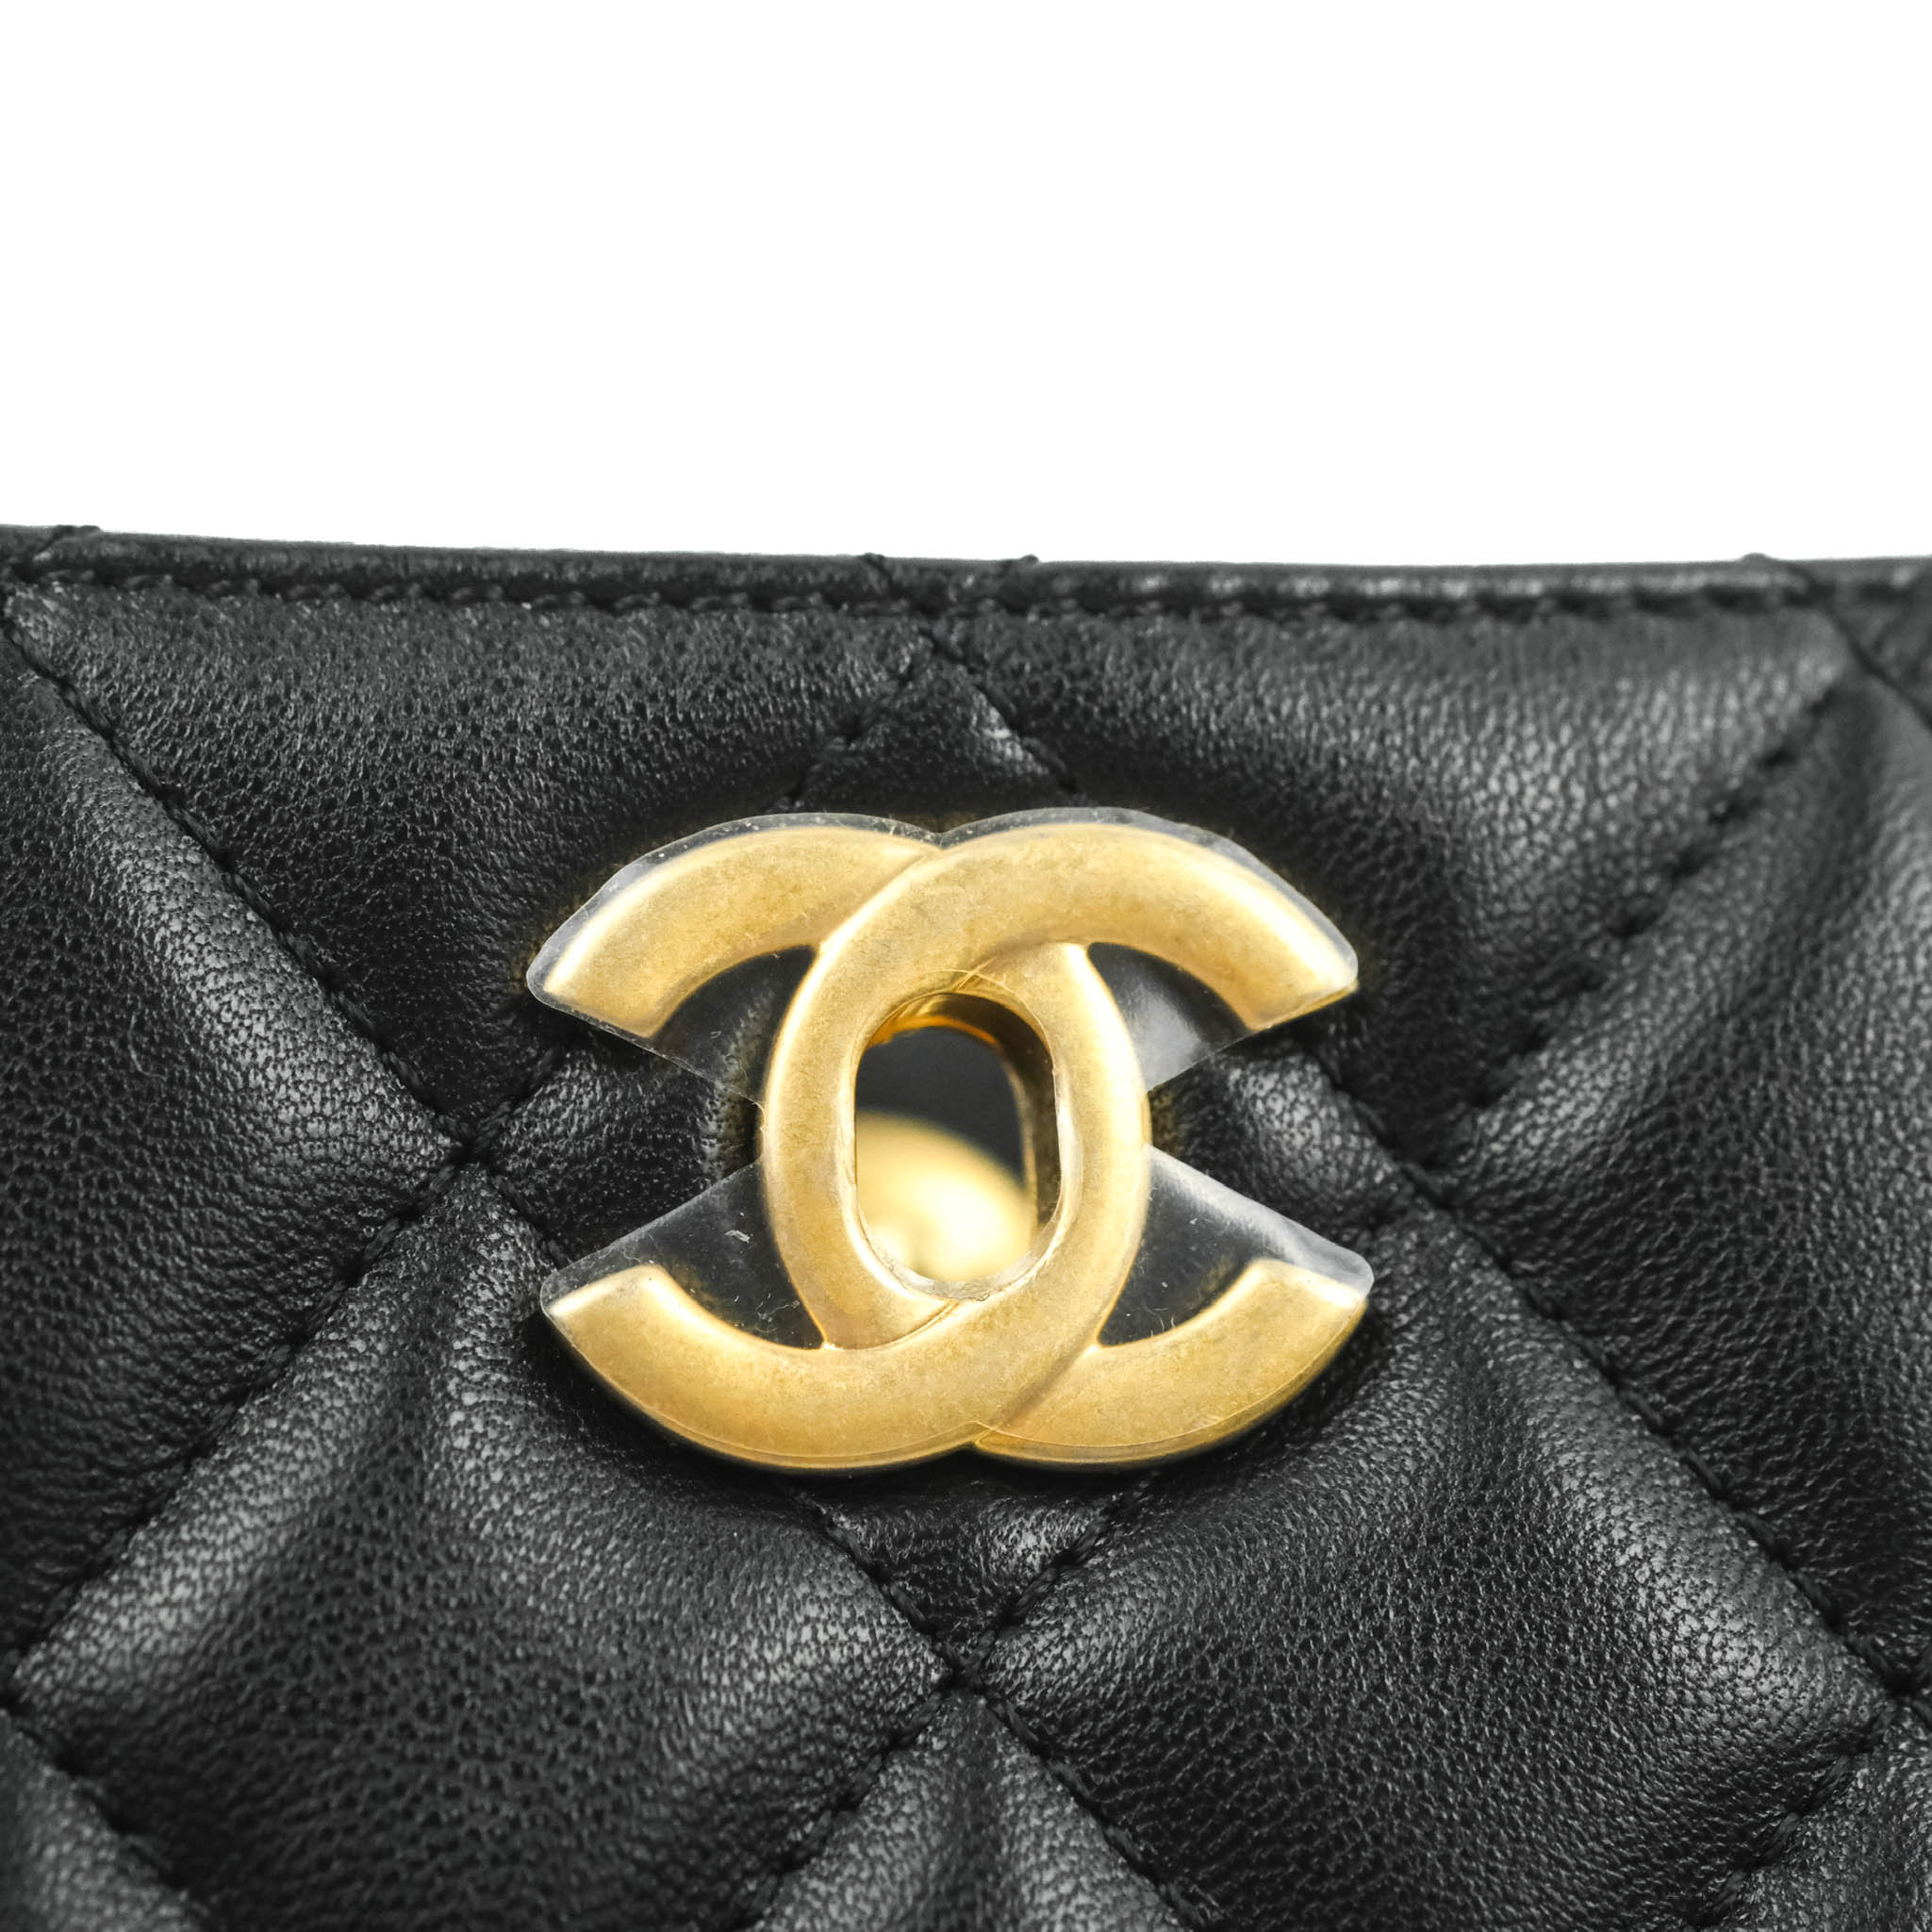 Chanel 22S hobo bag new pearl crush น่ารักน่าตำอีกแล้ว @koinaruemon 